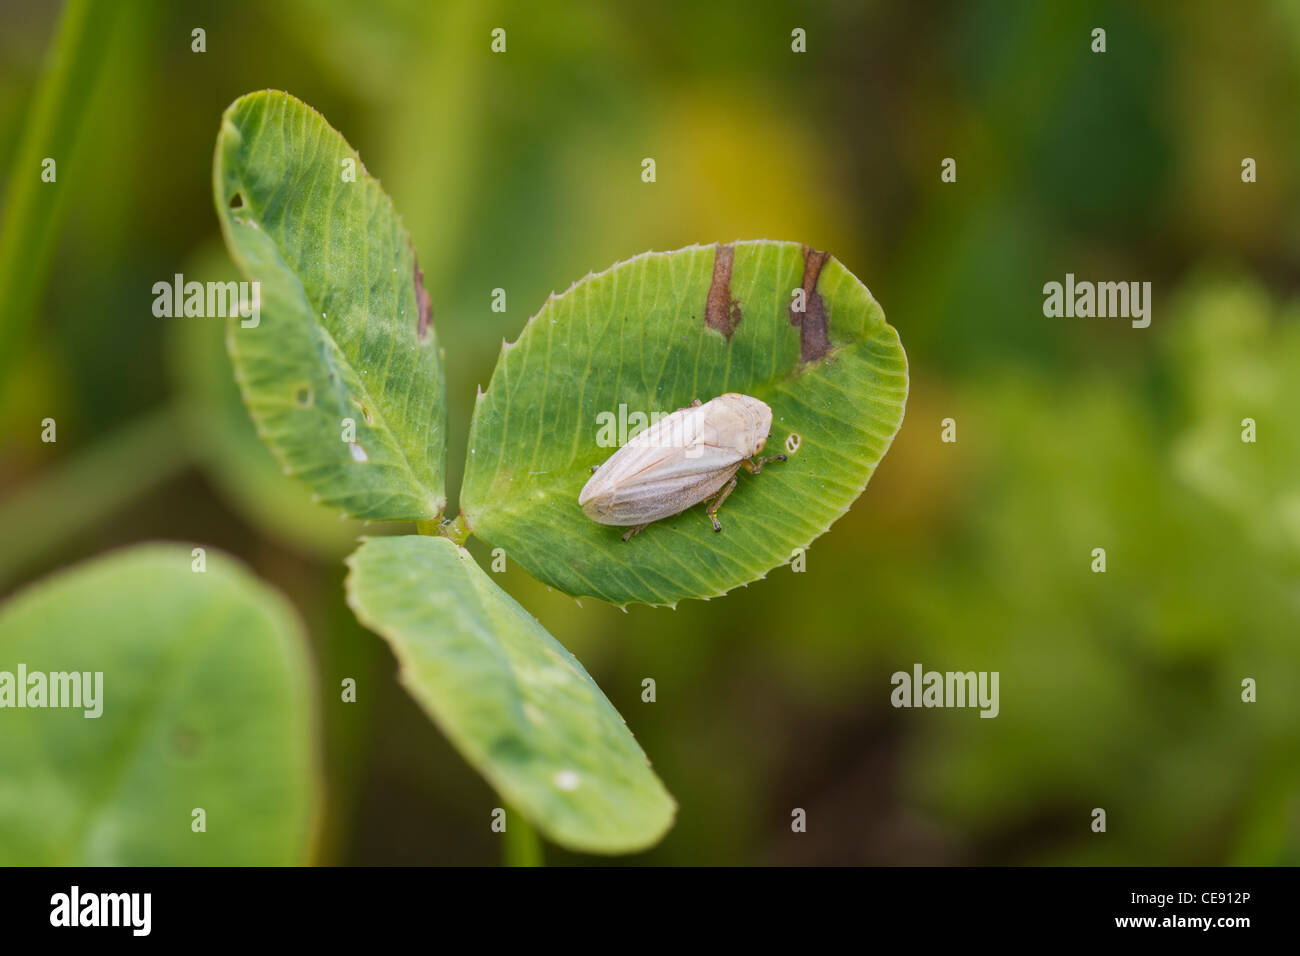 Leafhopper perched on a plant leaf closeup Stock Photo